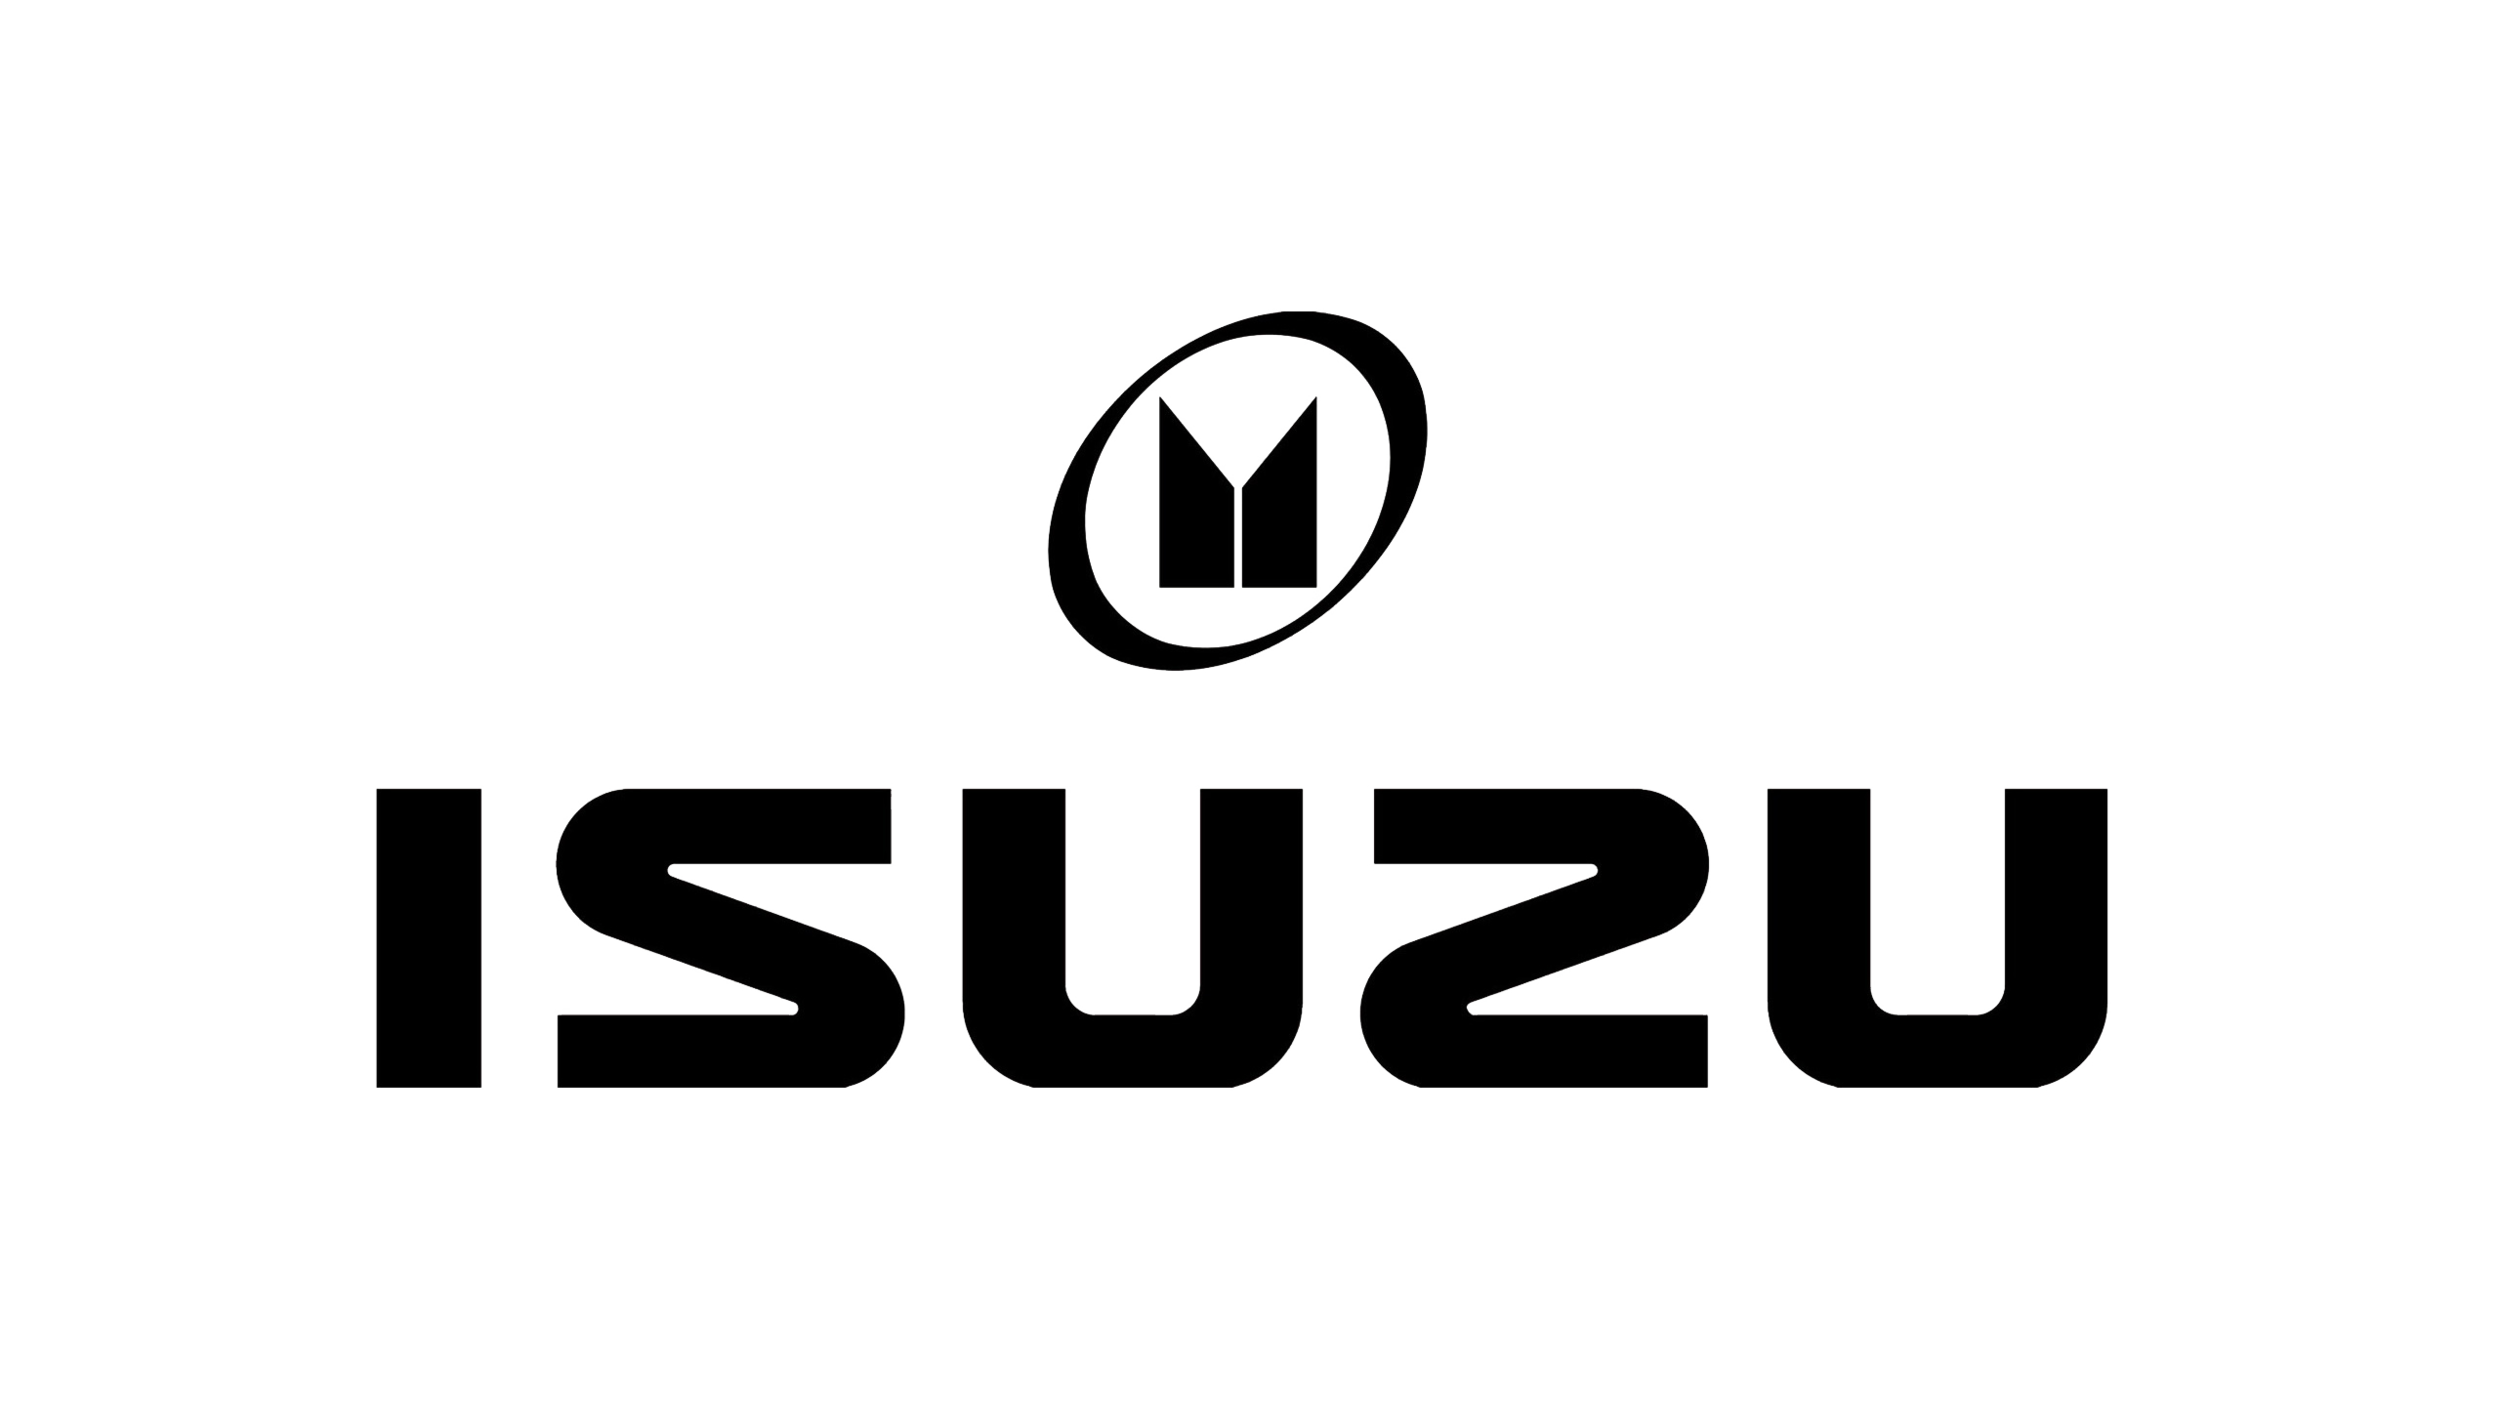 Isuzu-logo-black-2560x1440.png